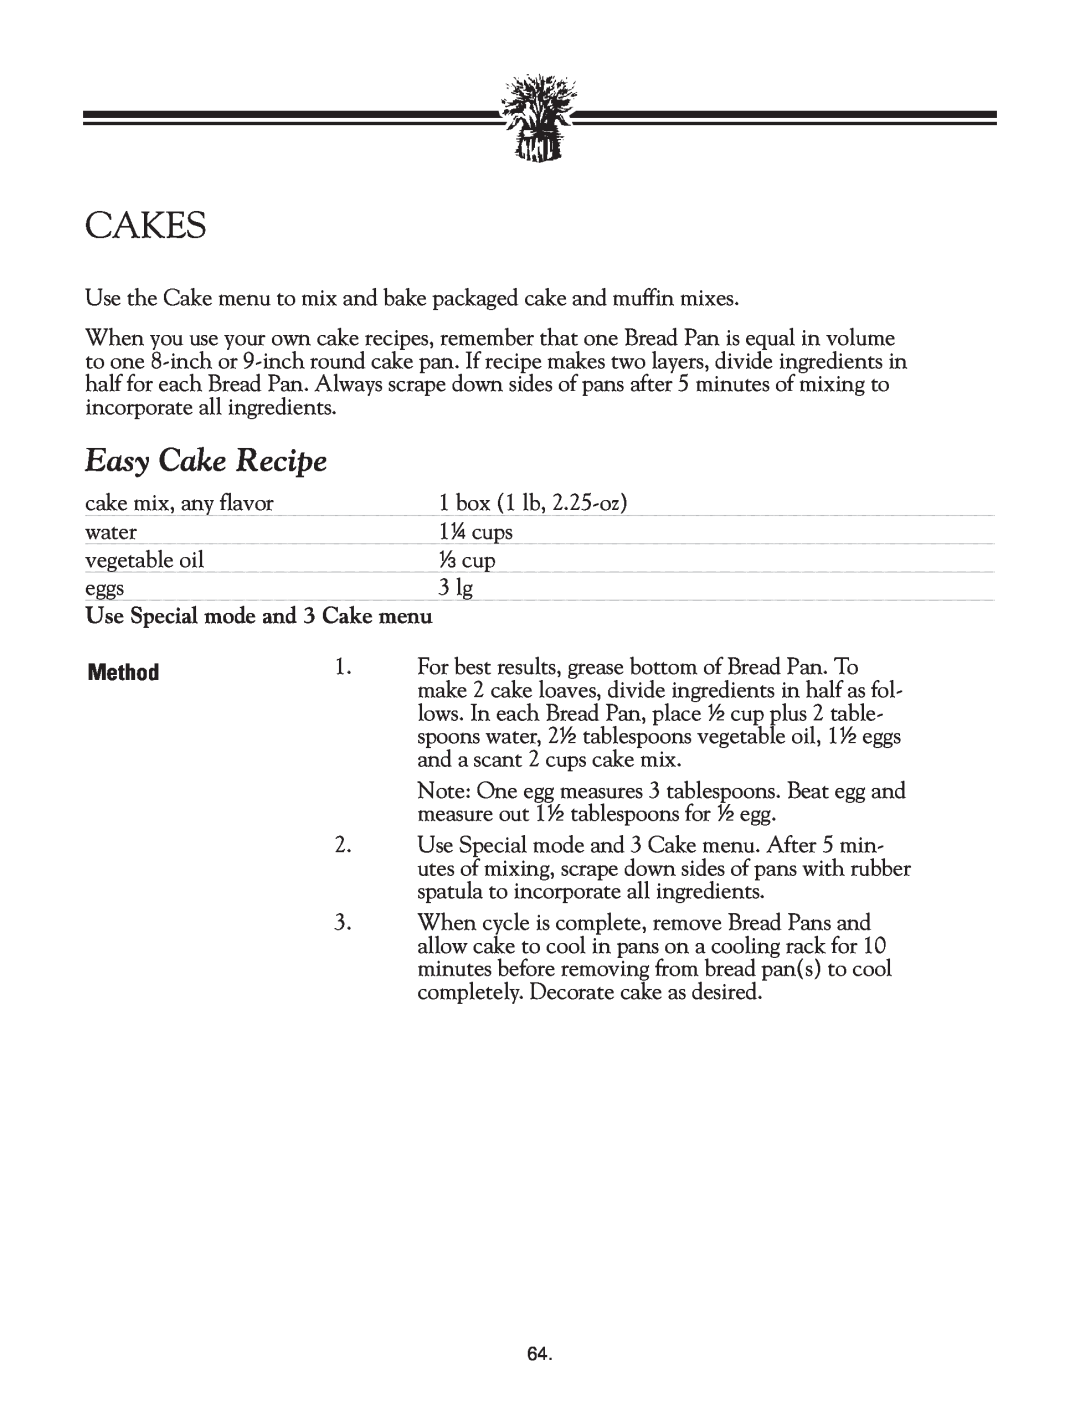 Breadman TR2828G instruction manual Cakes, Easy Cake Recipe, Method 